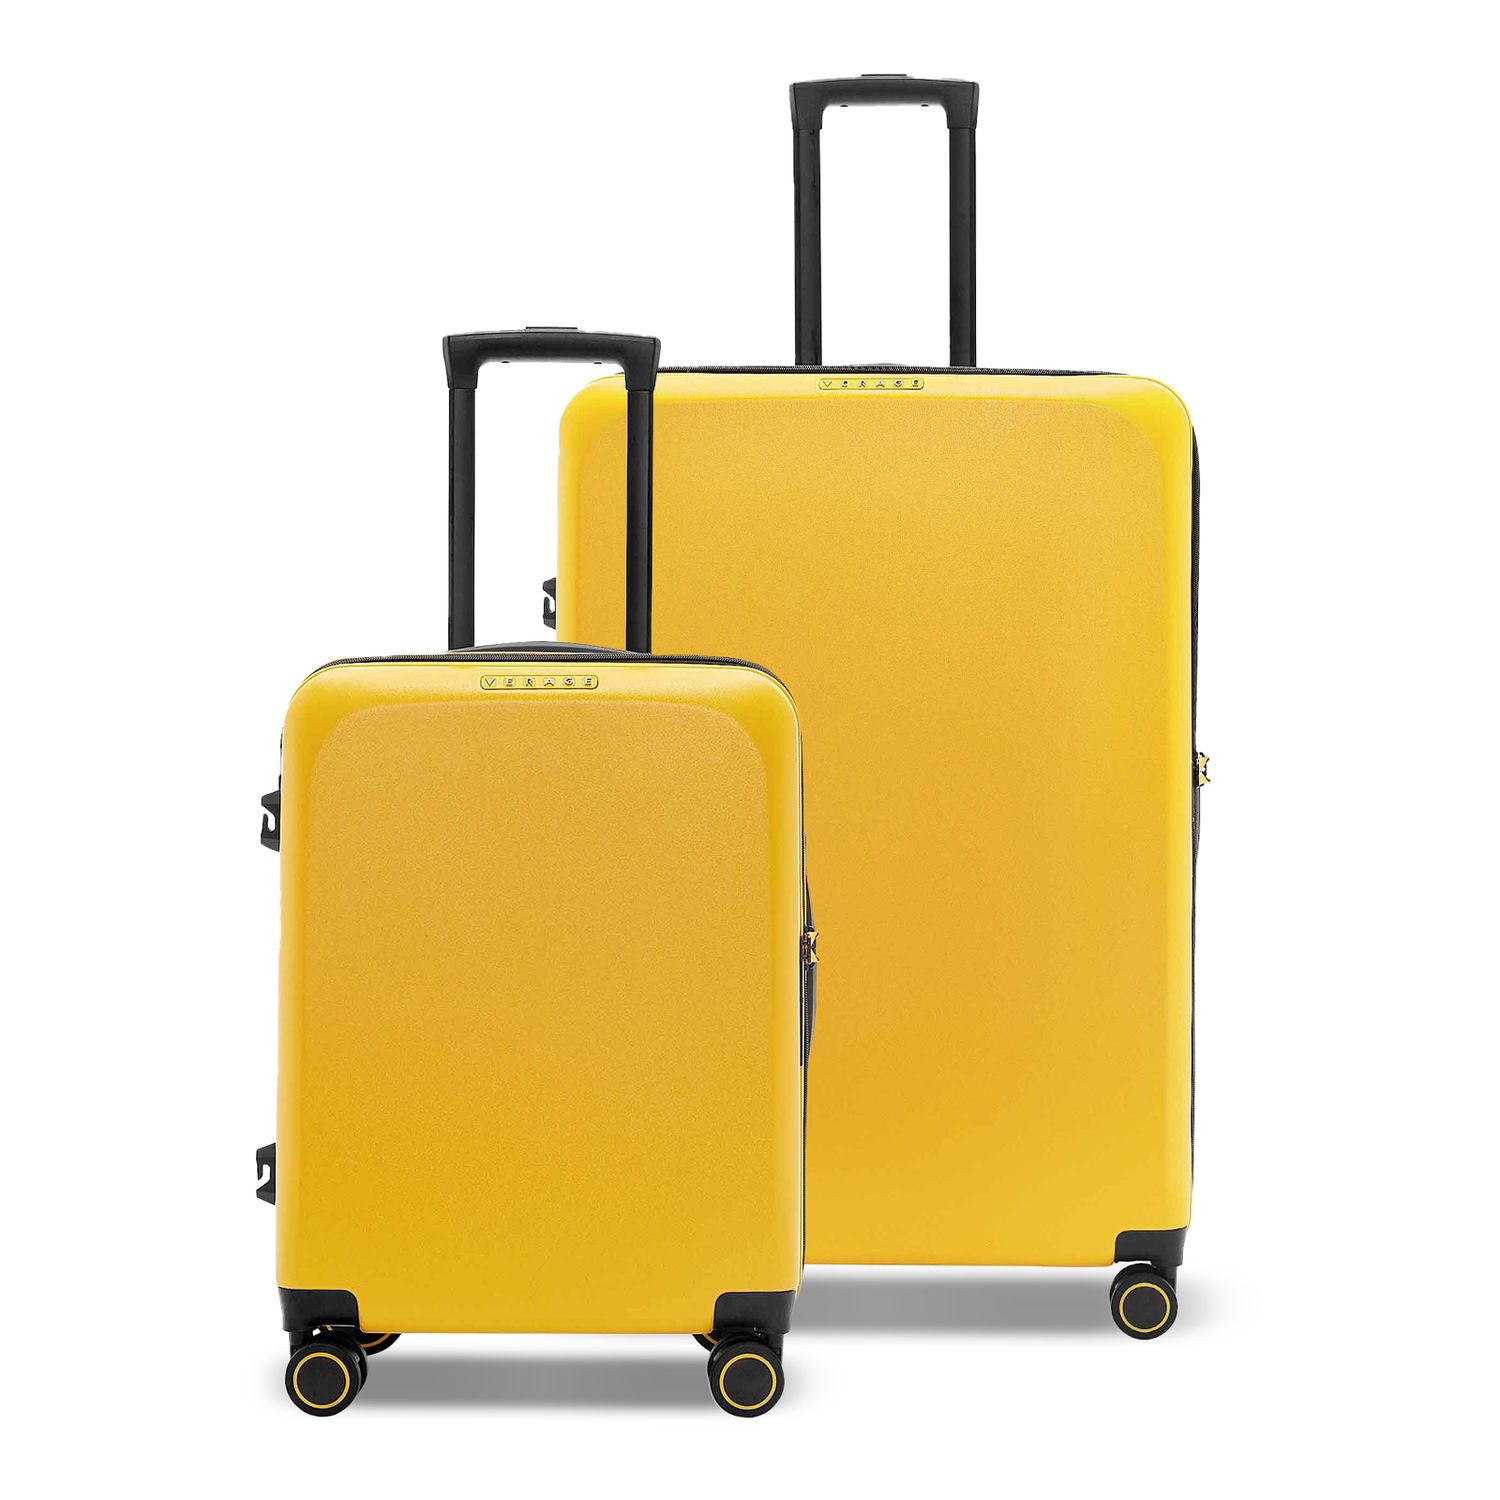 Yellow suitcase set